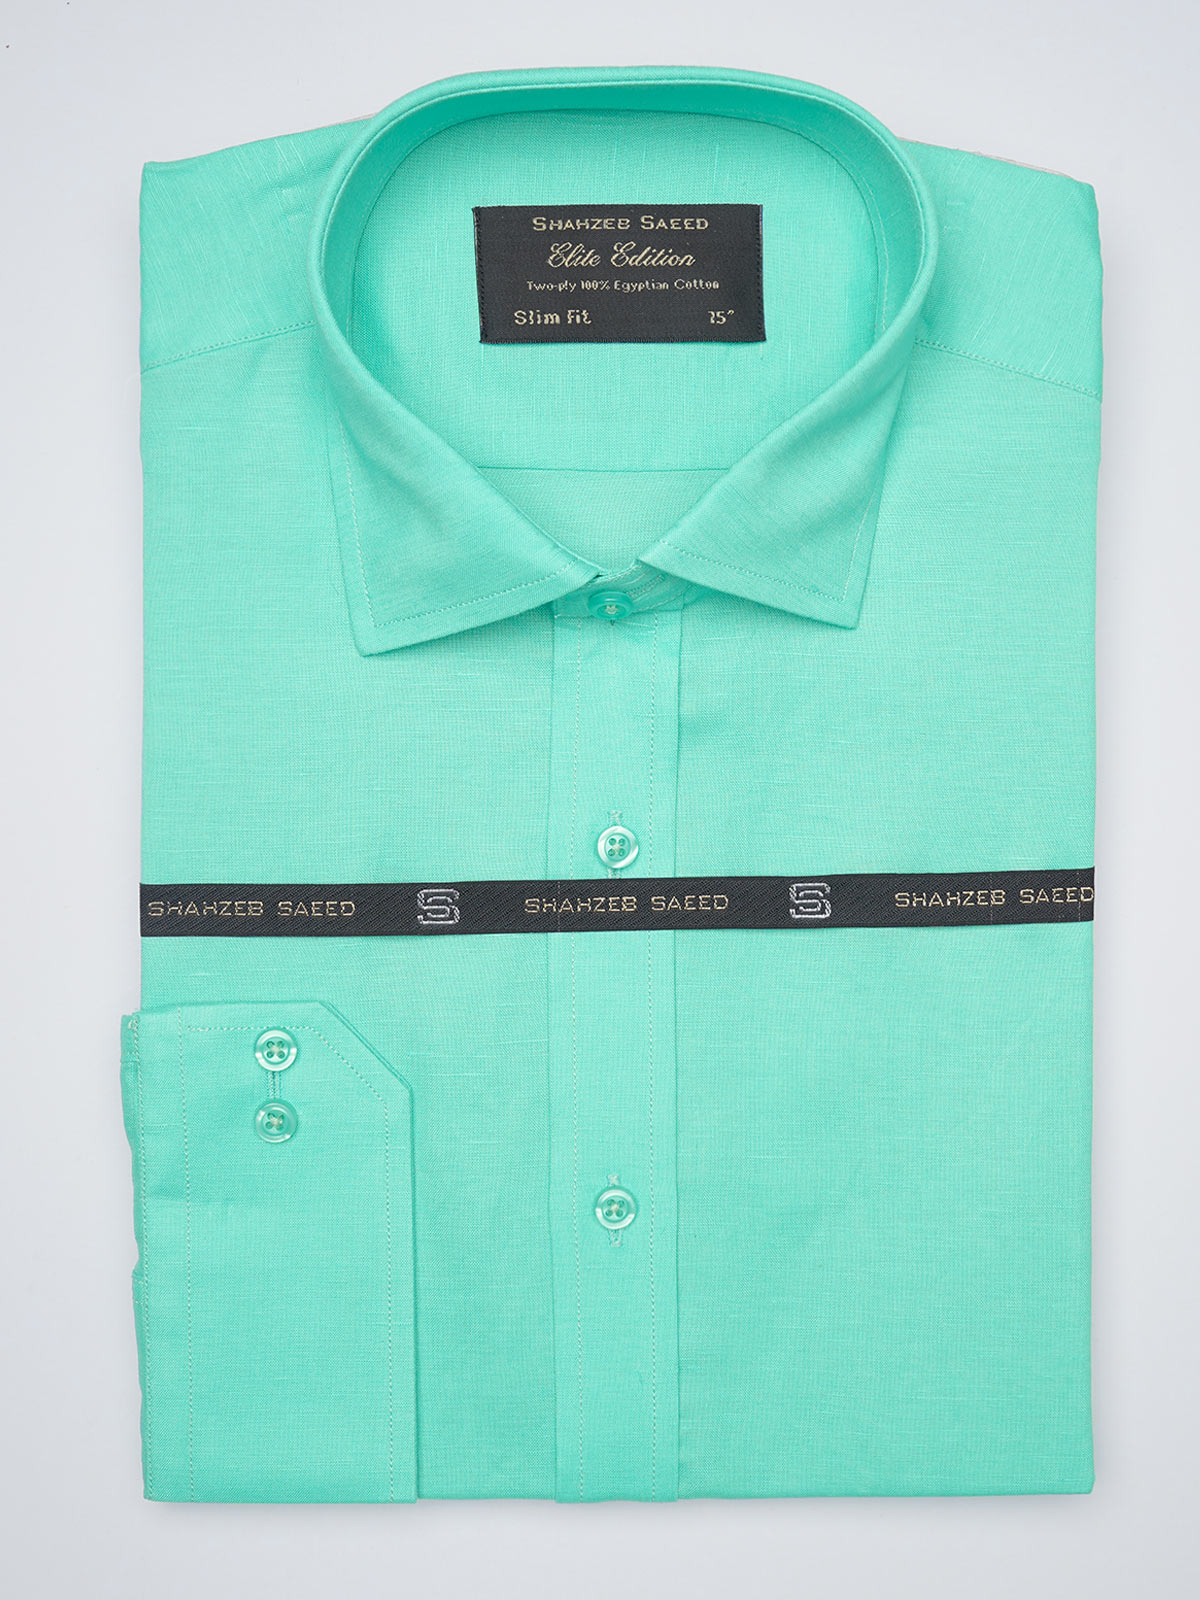 Aqua Green Plain, Elite Edition, French Collar Men’s Formal Shirt (FS-1032)